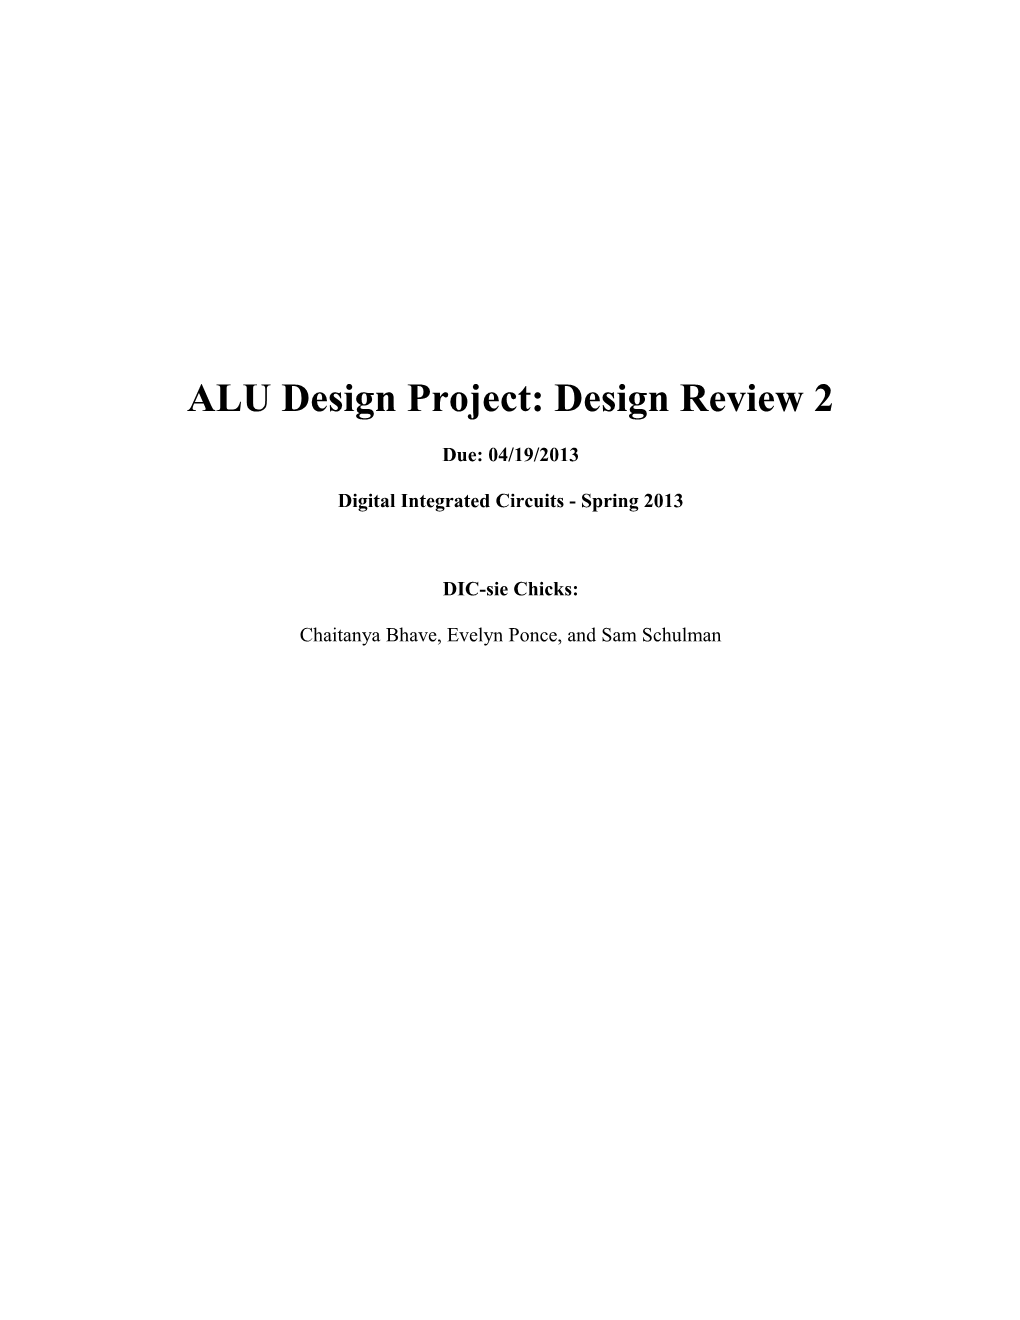 ALU Design Project: Design Review 2